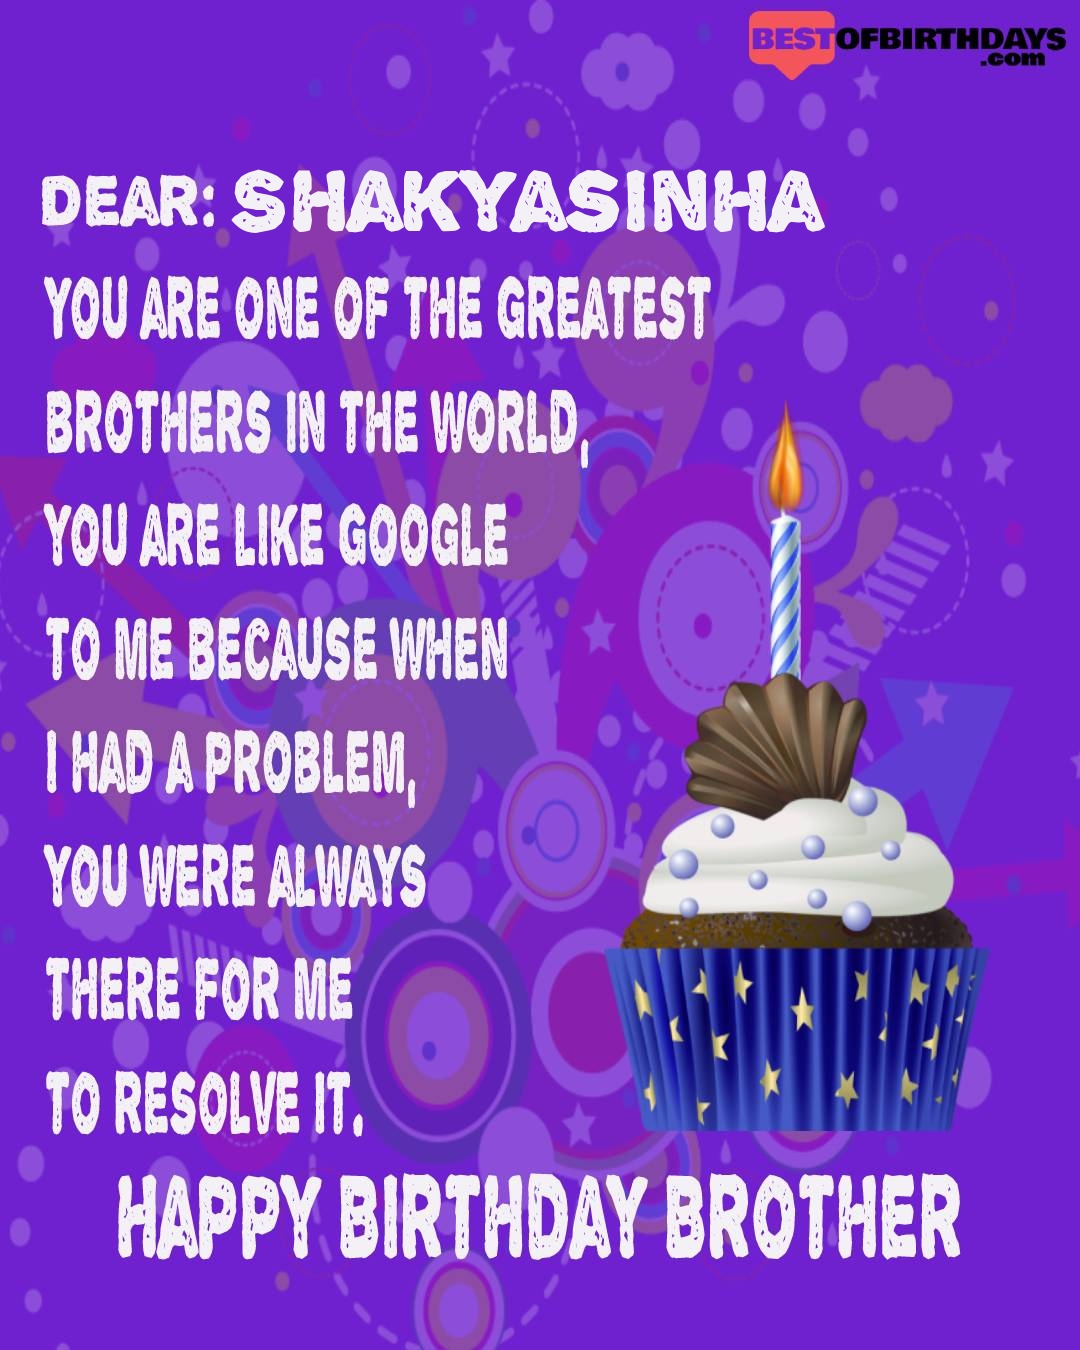 Happy birthday shakyasinha bhai brother bro